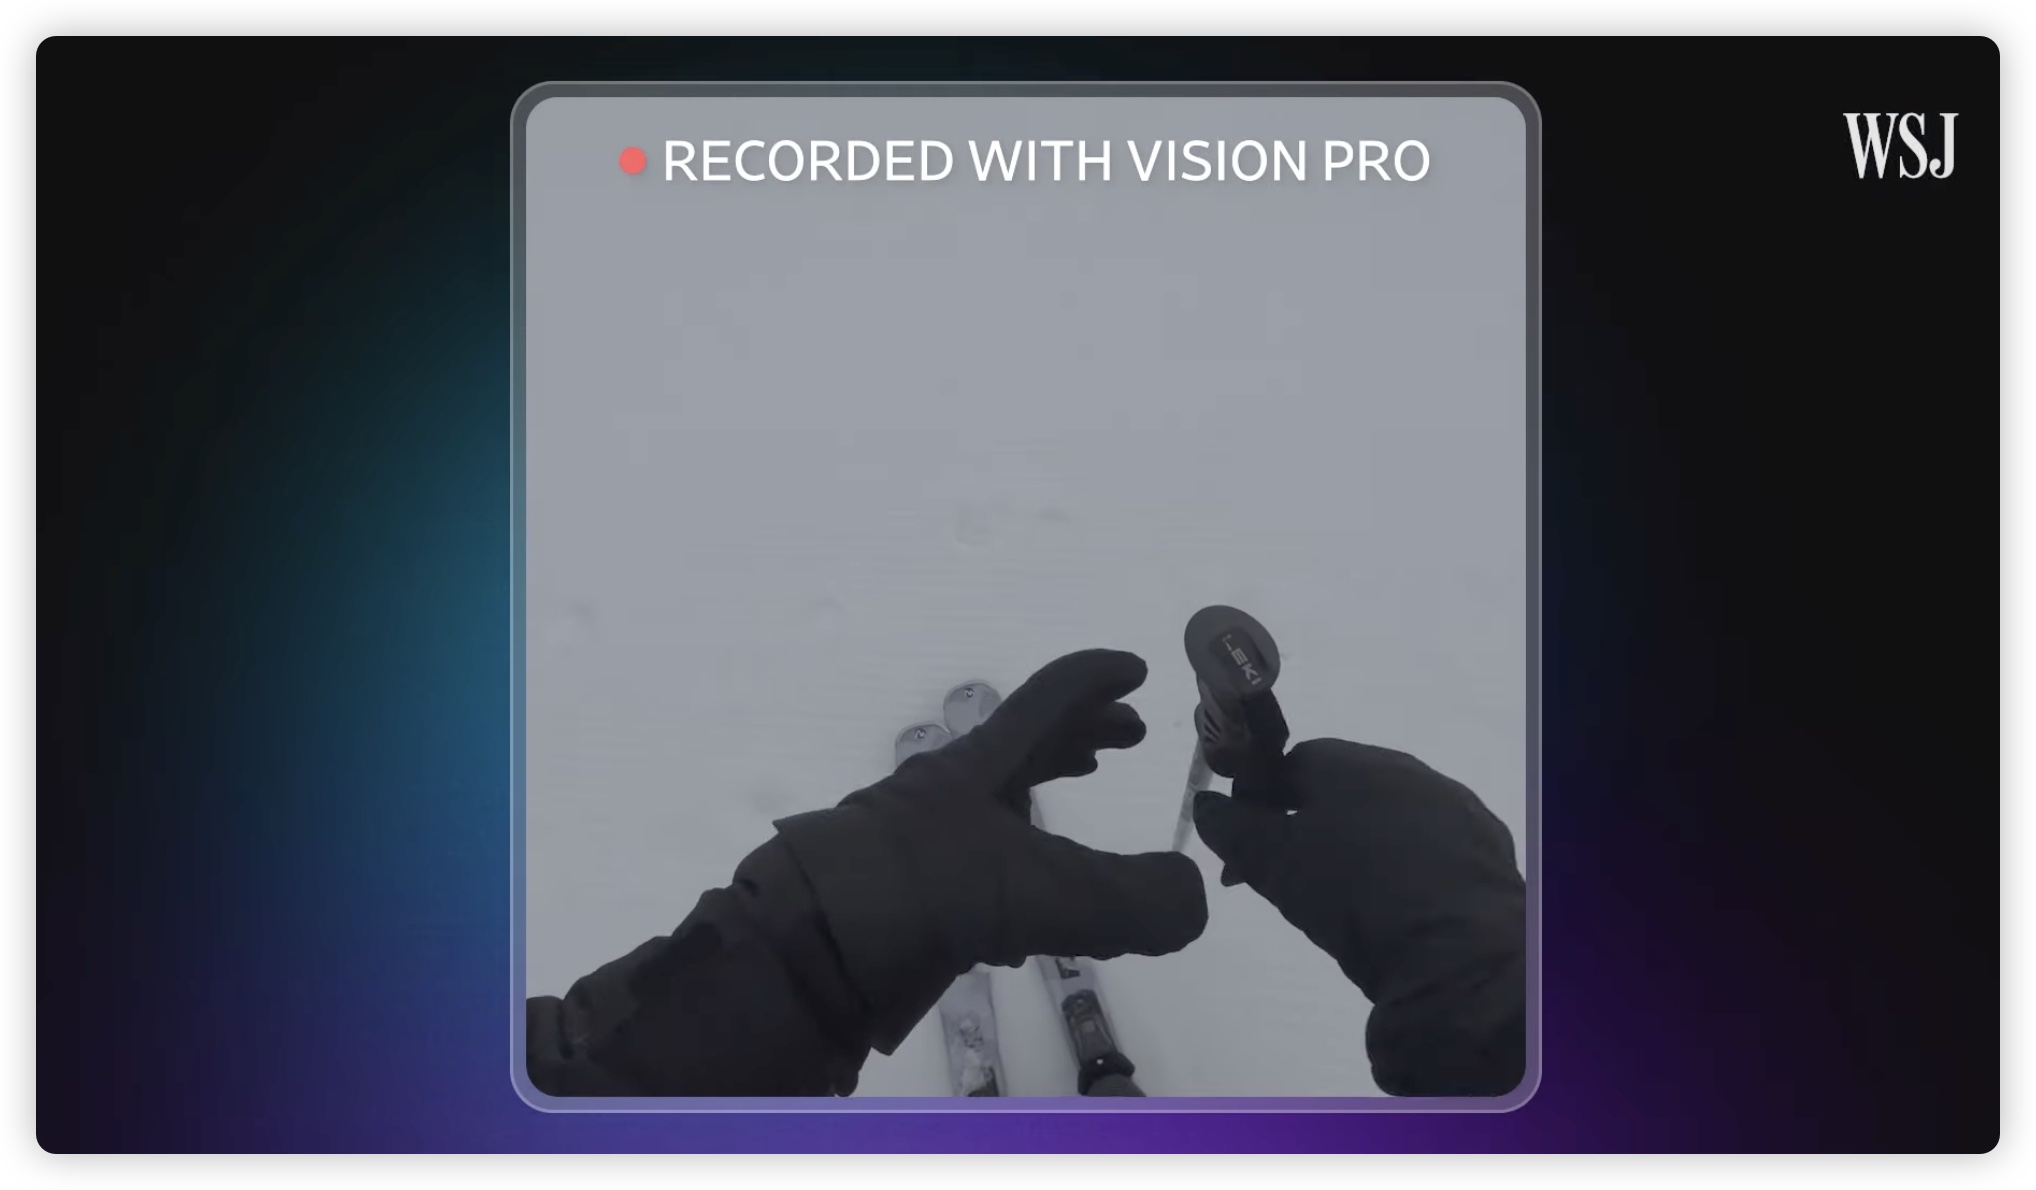 Vision Pro 開箱體驗